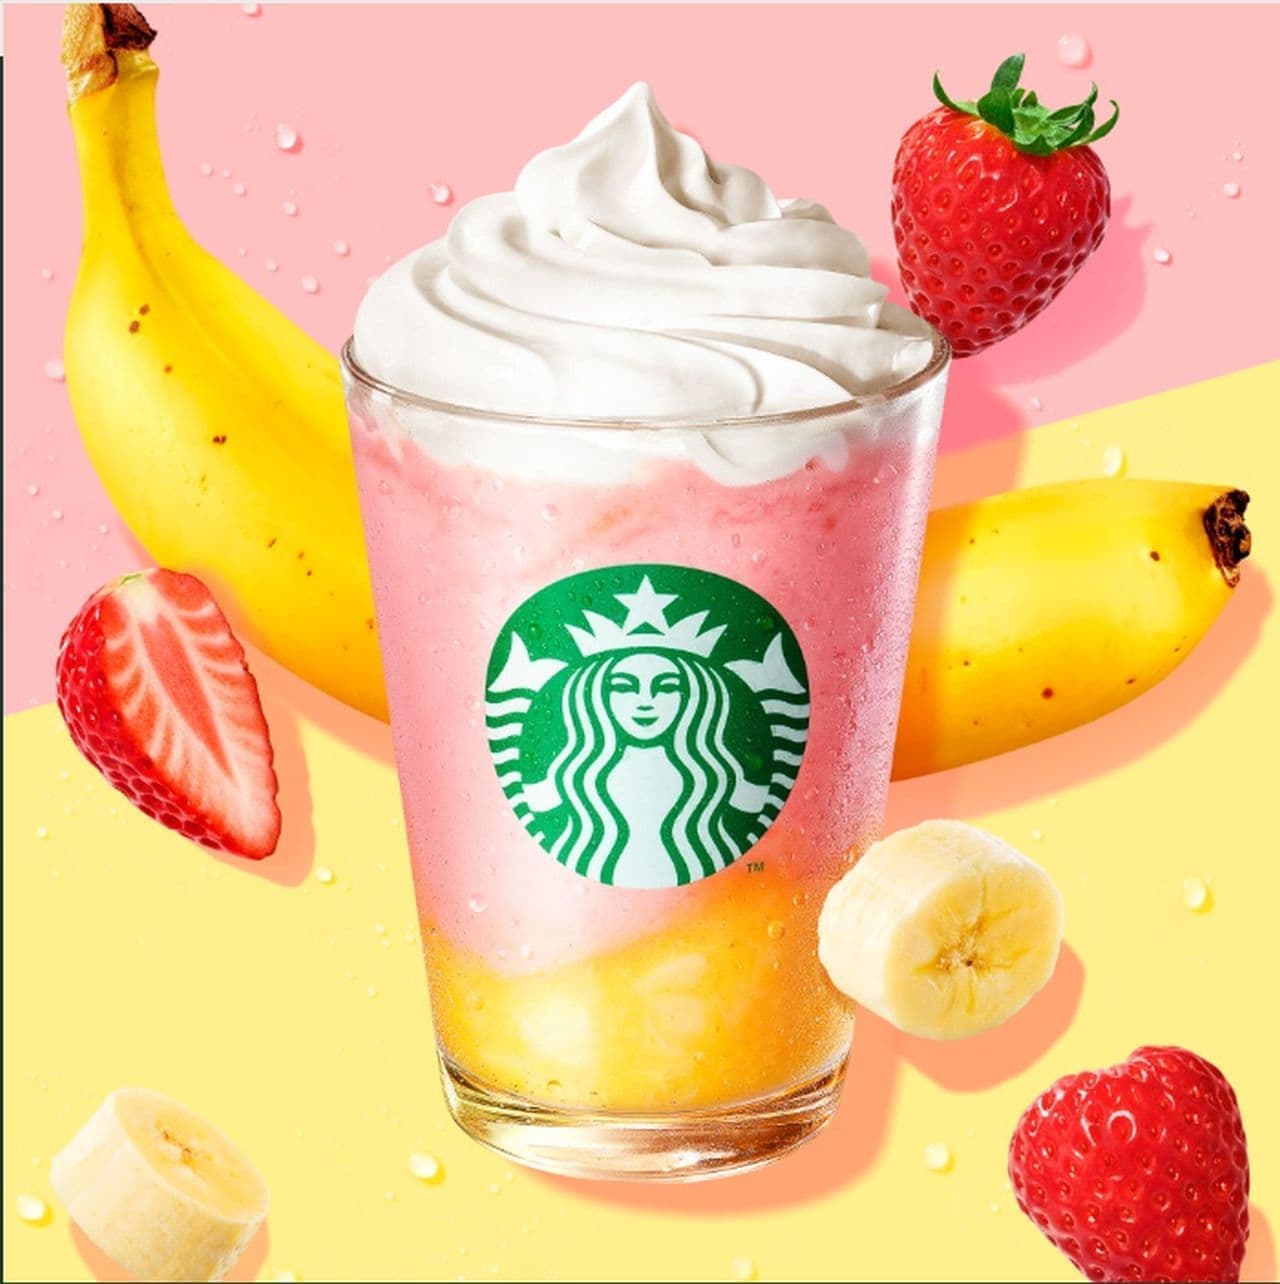 Starbucks "Strawberry Banana Frappuccino